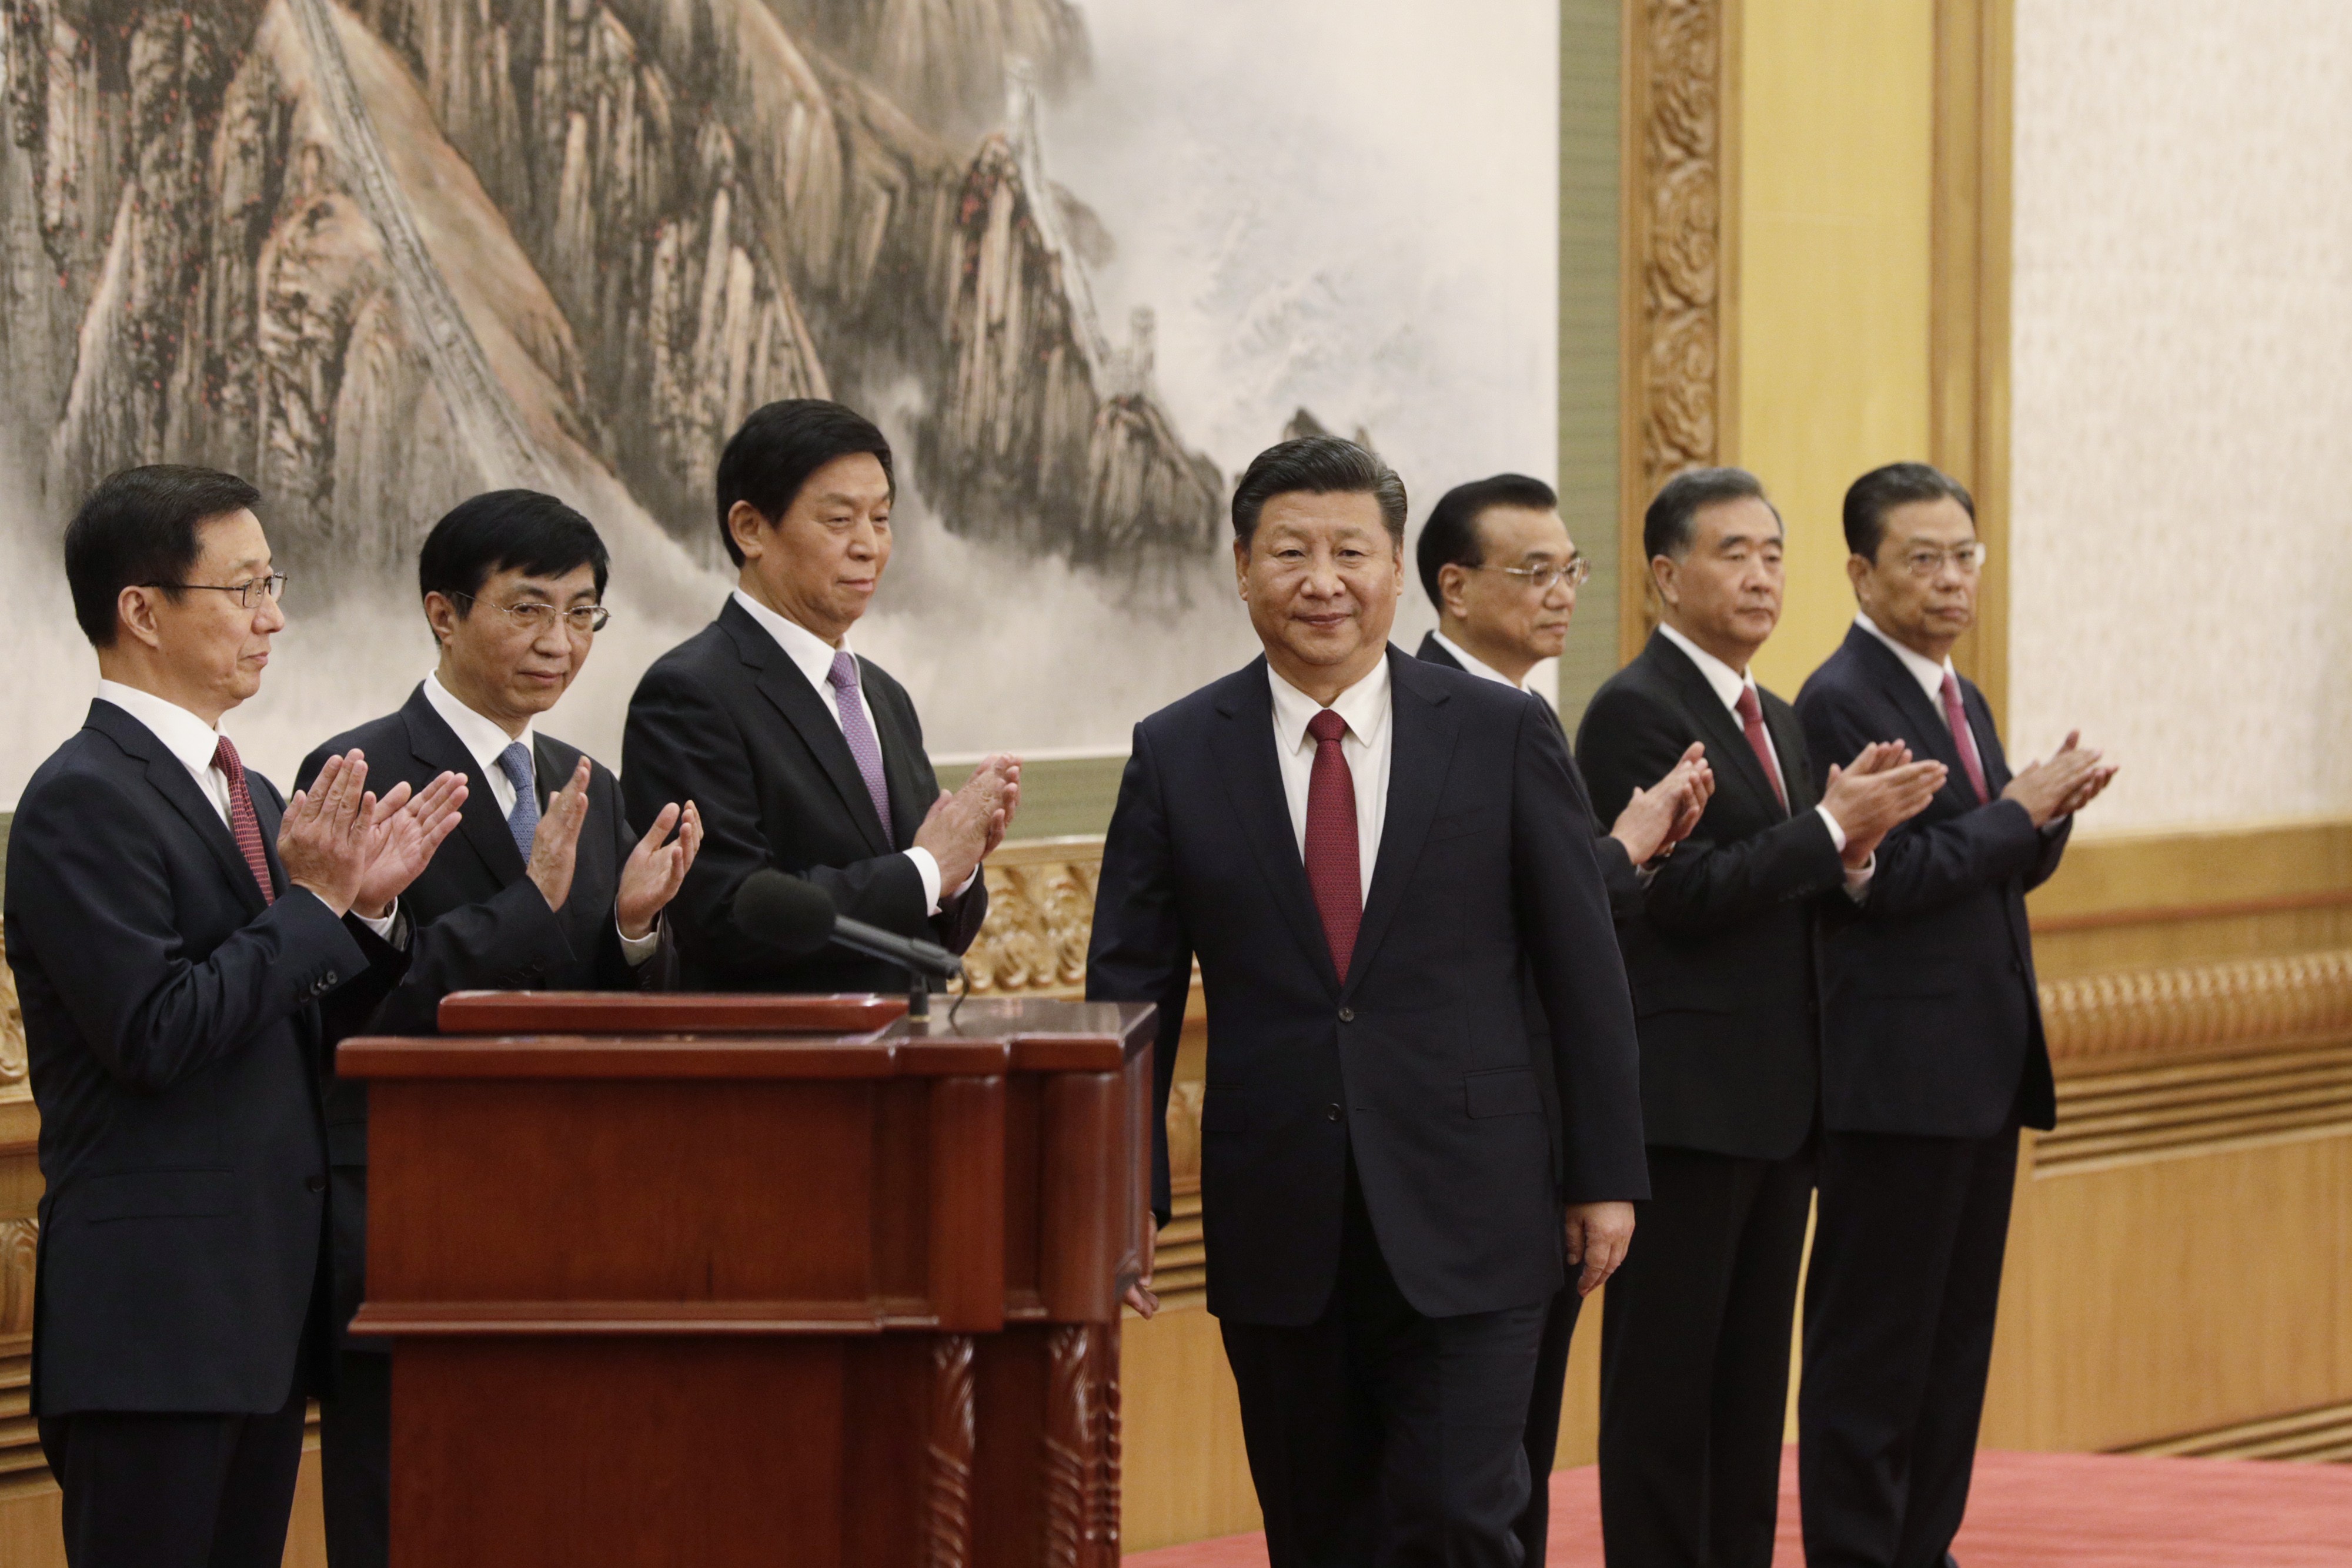 China’s President Xi Jinping (centre) is flanked by his fellow members of the elite Politburo Standing Committee. They are:(from left) Han Zheng, Wang Huning, Li Zhanshu, Li Keqiang, Wang Yang and Zhao Leji. Photo: Bloomberg.